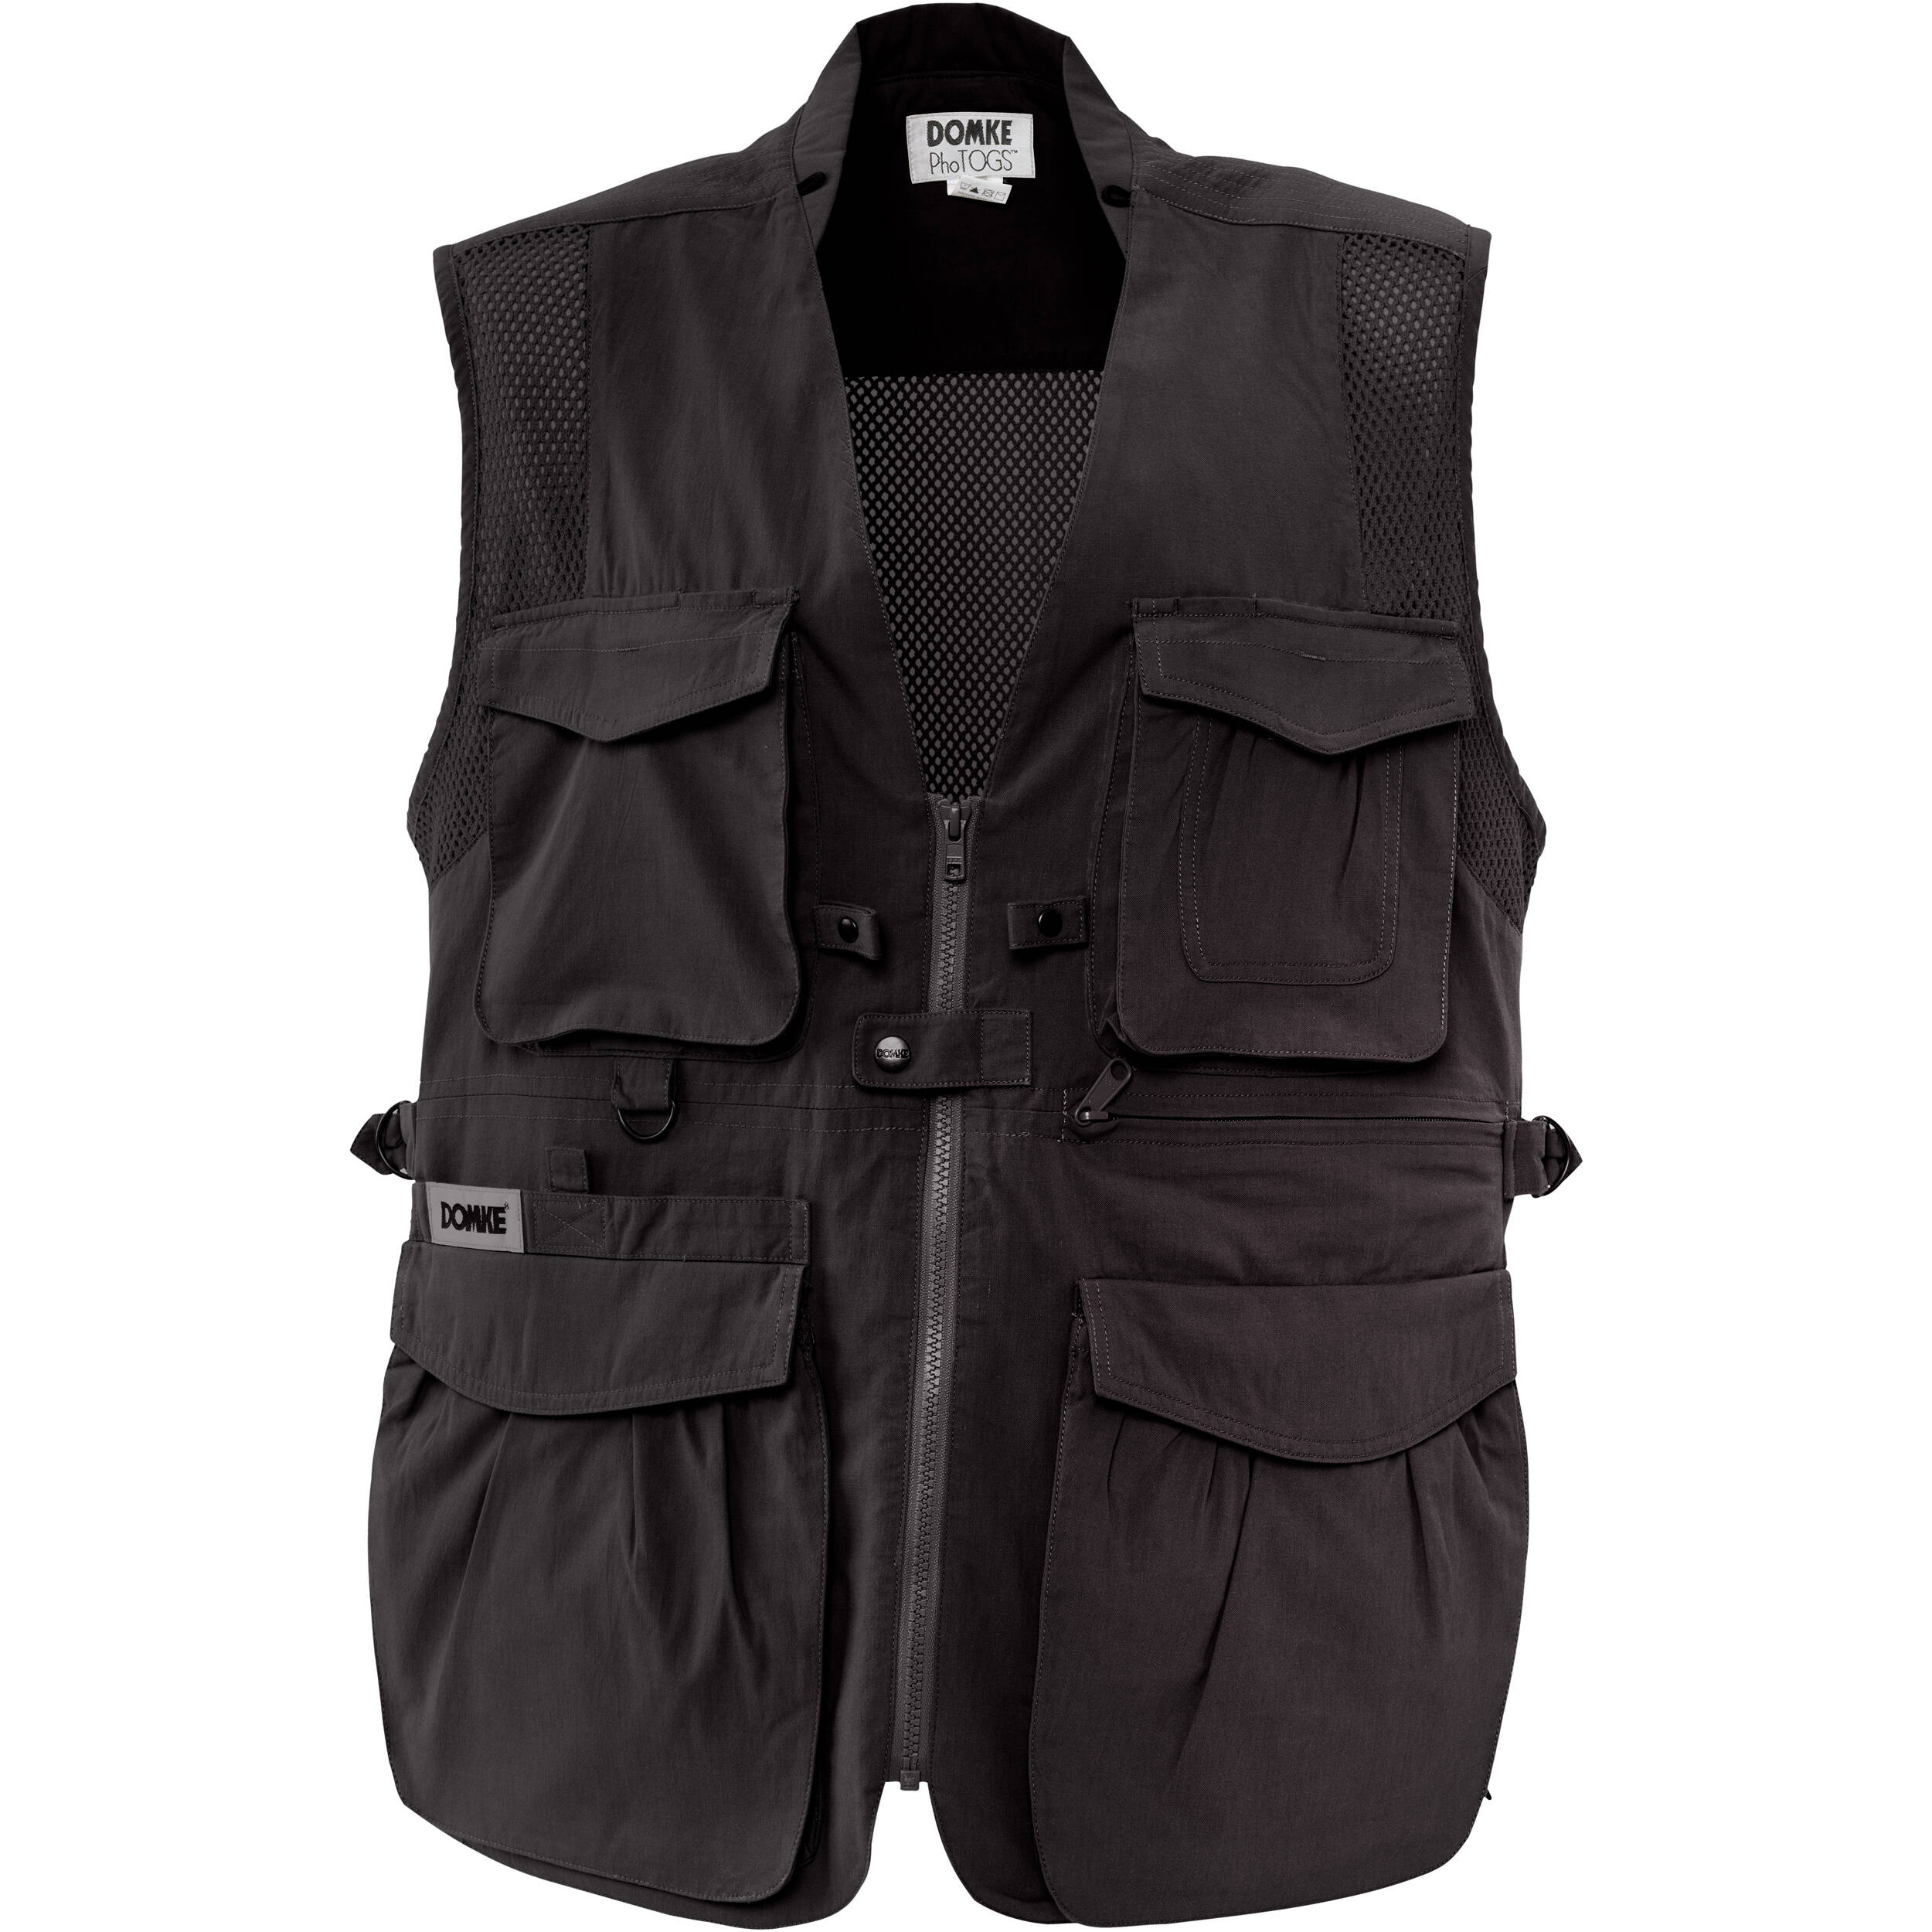 Domke PhoTOGS Vest (Small, Black)